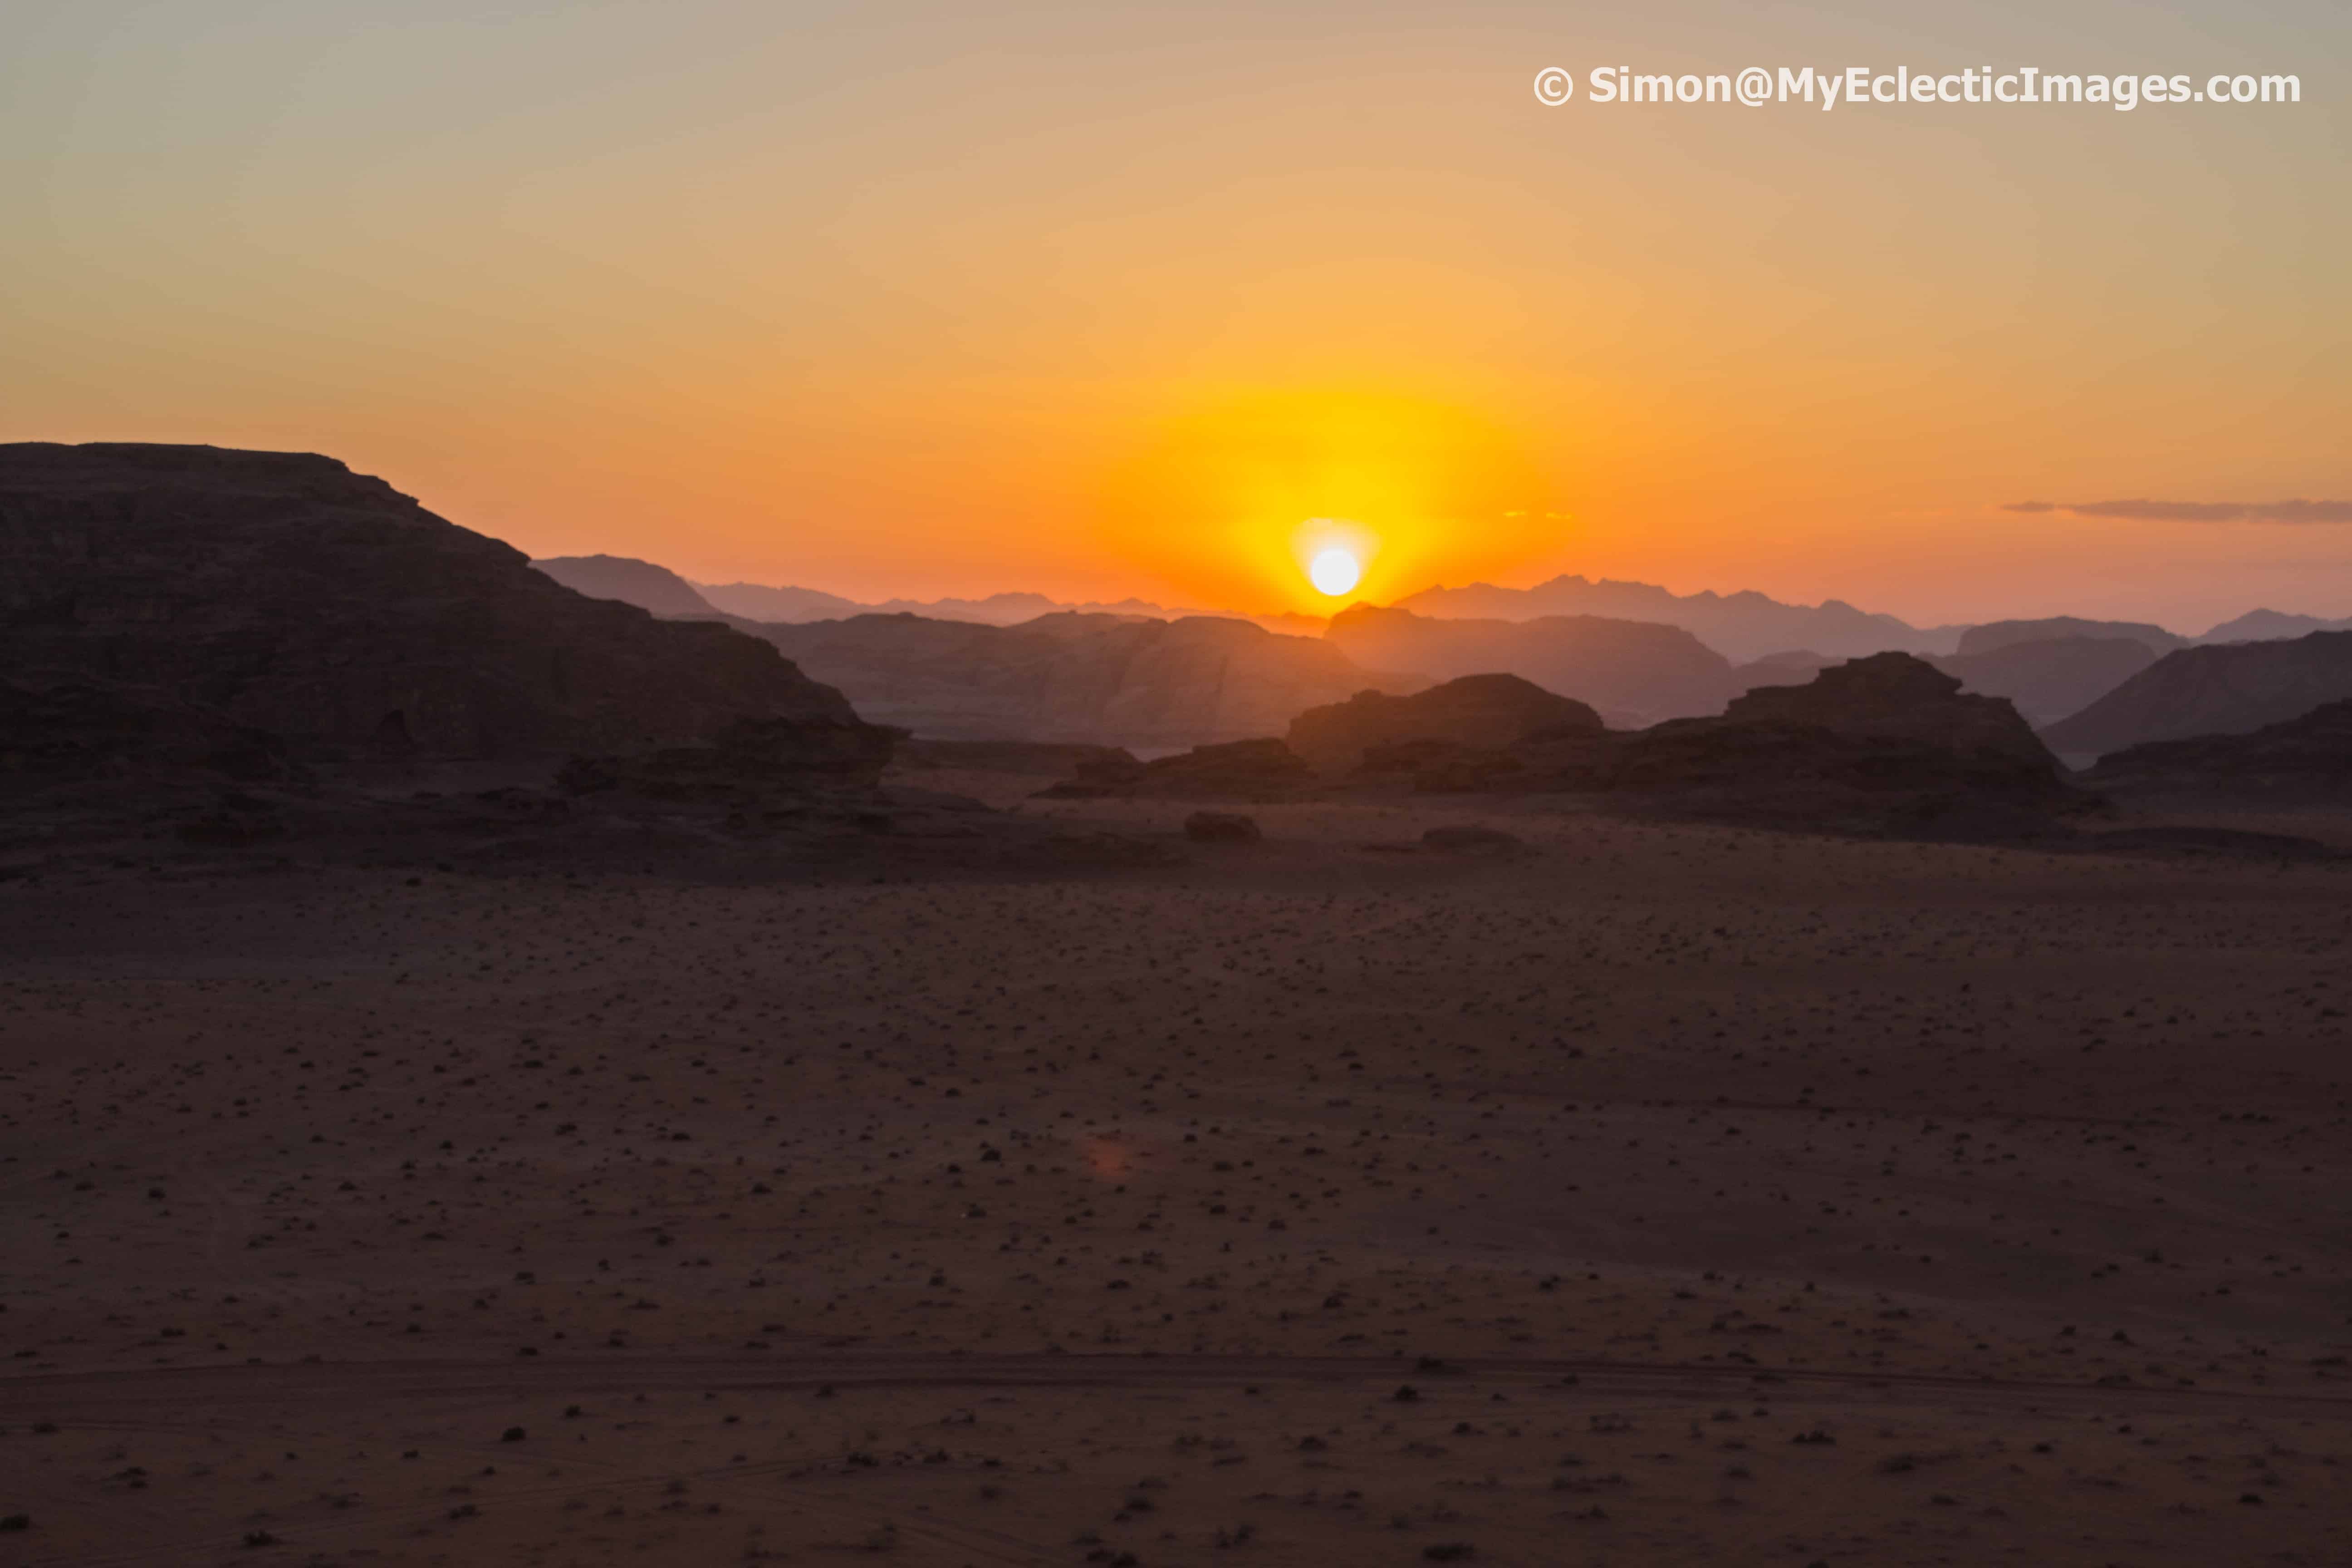 Sunset Over the Mountains Bordering Wadi Rum Jordan